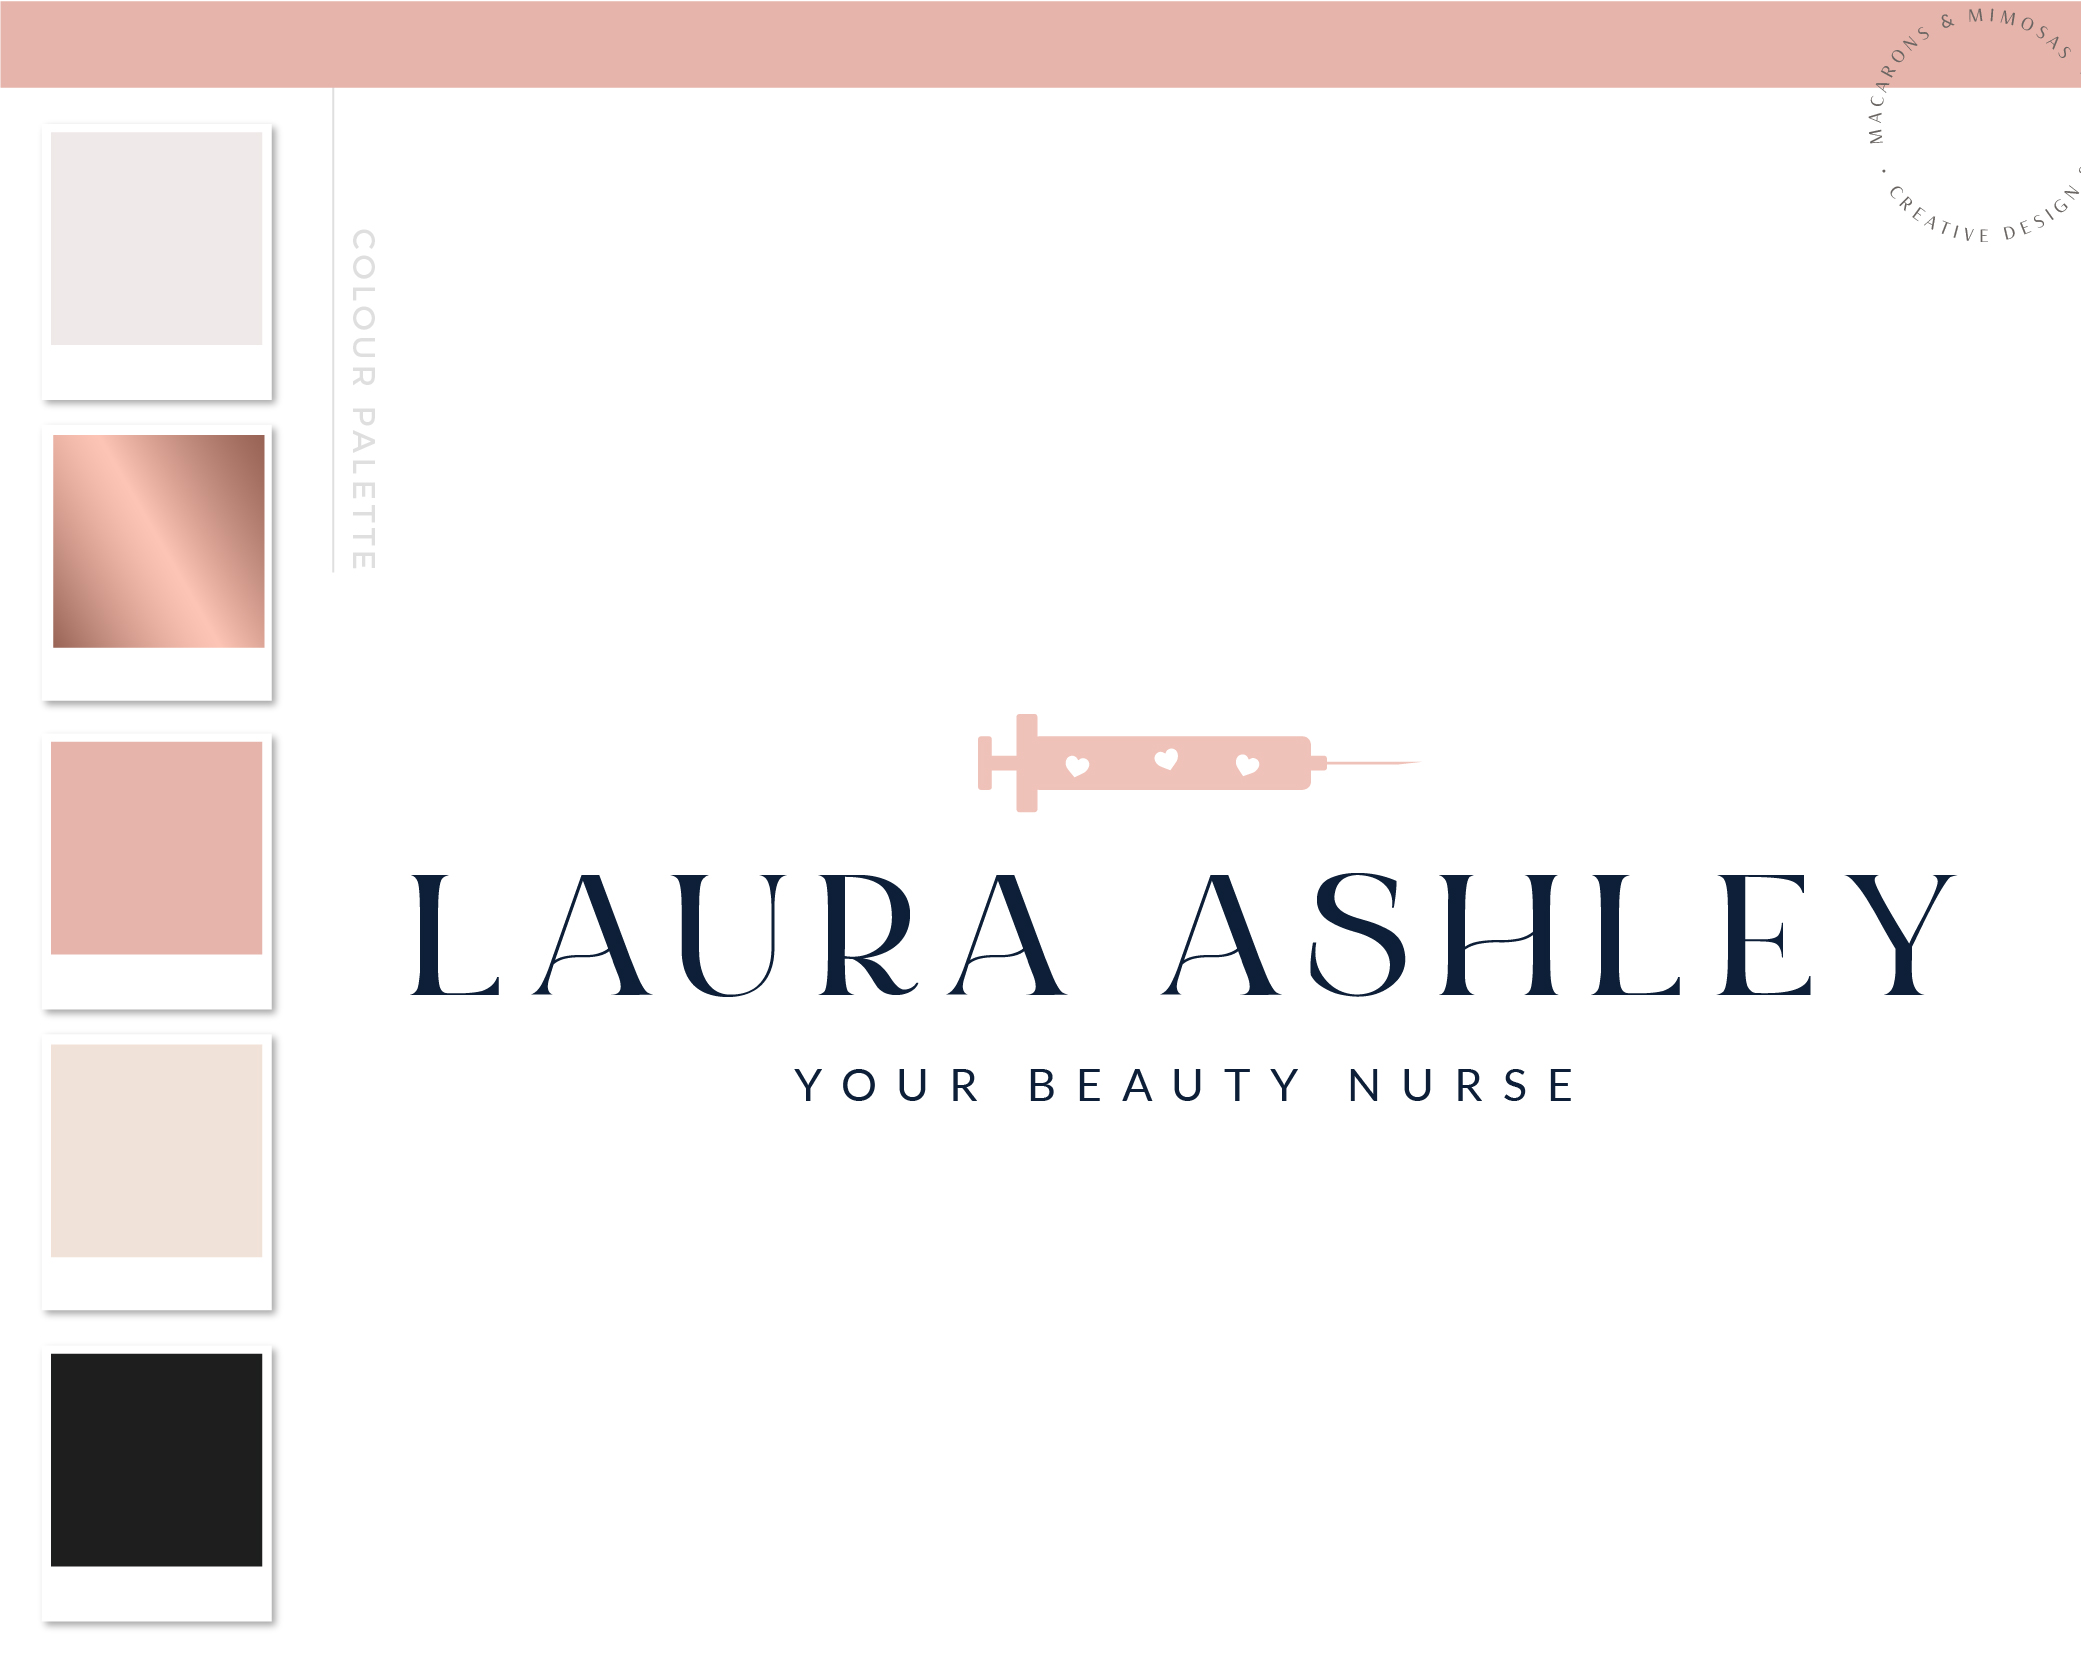 Laura Cosmetics Logo PNG Transparent & SVG Vector - Freebie Supply